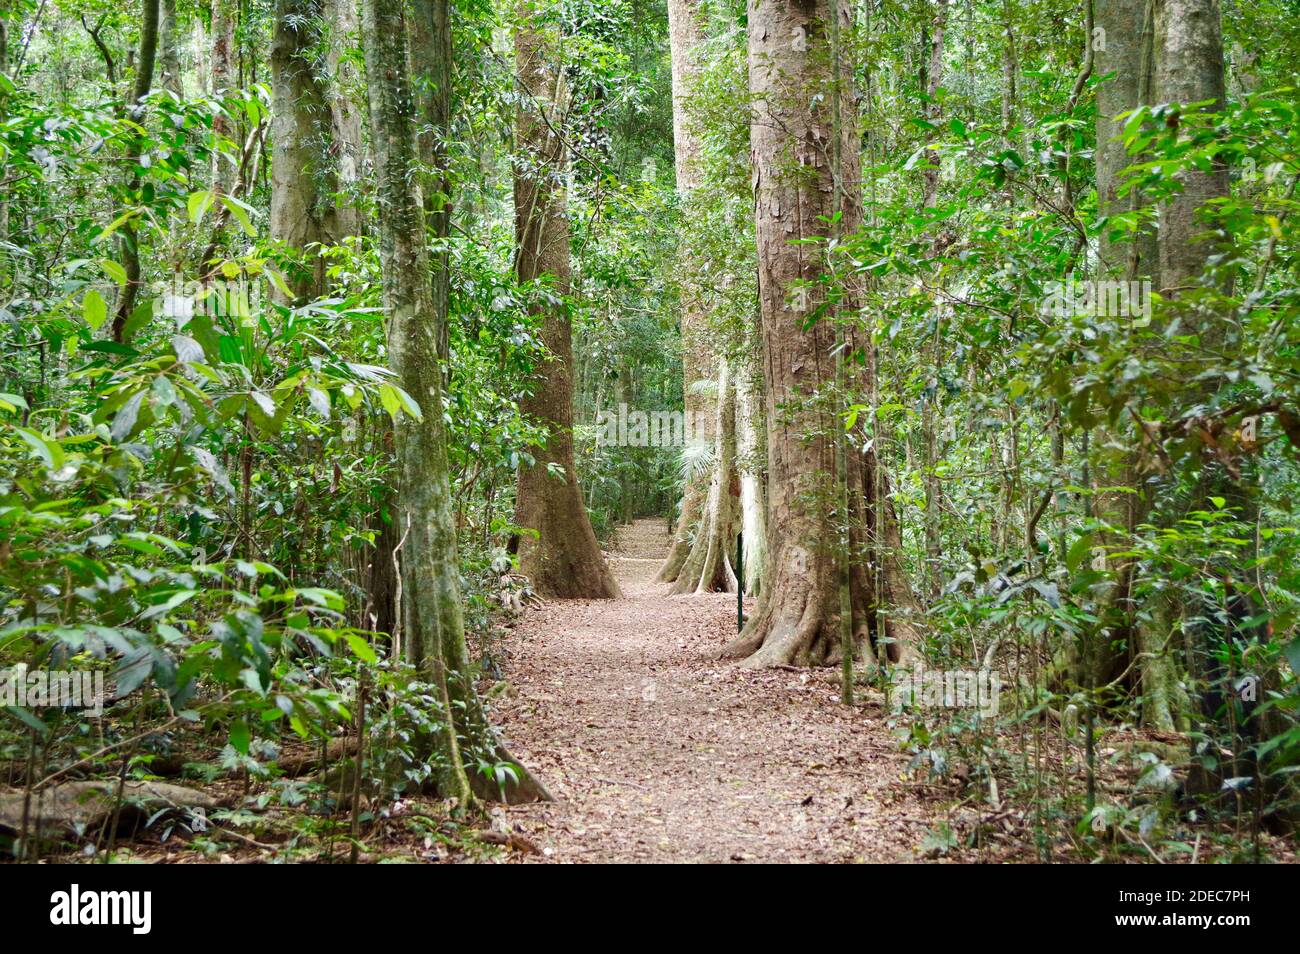 Peaceful path winding through rainforest trees Stock Photo